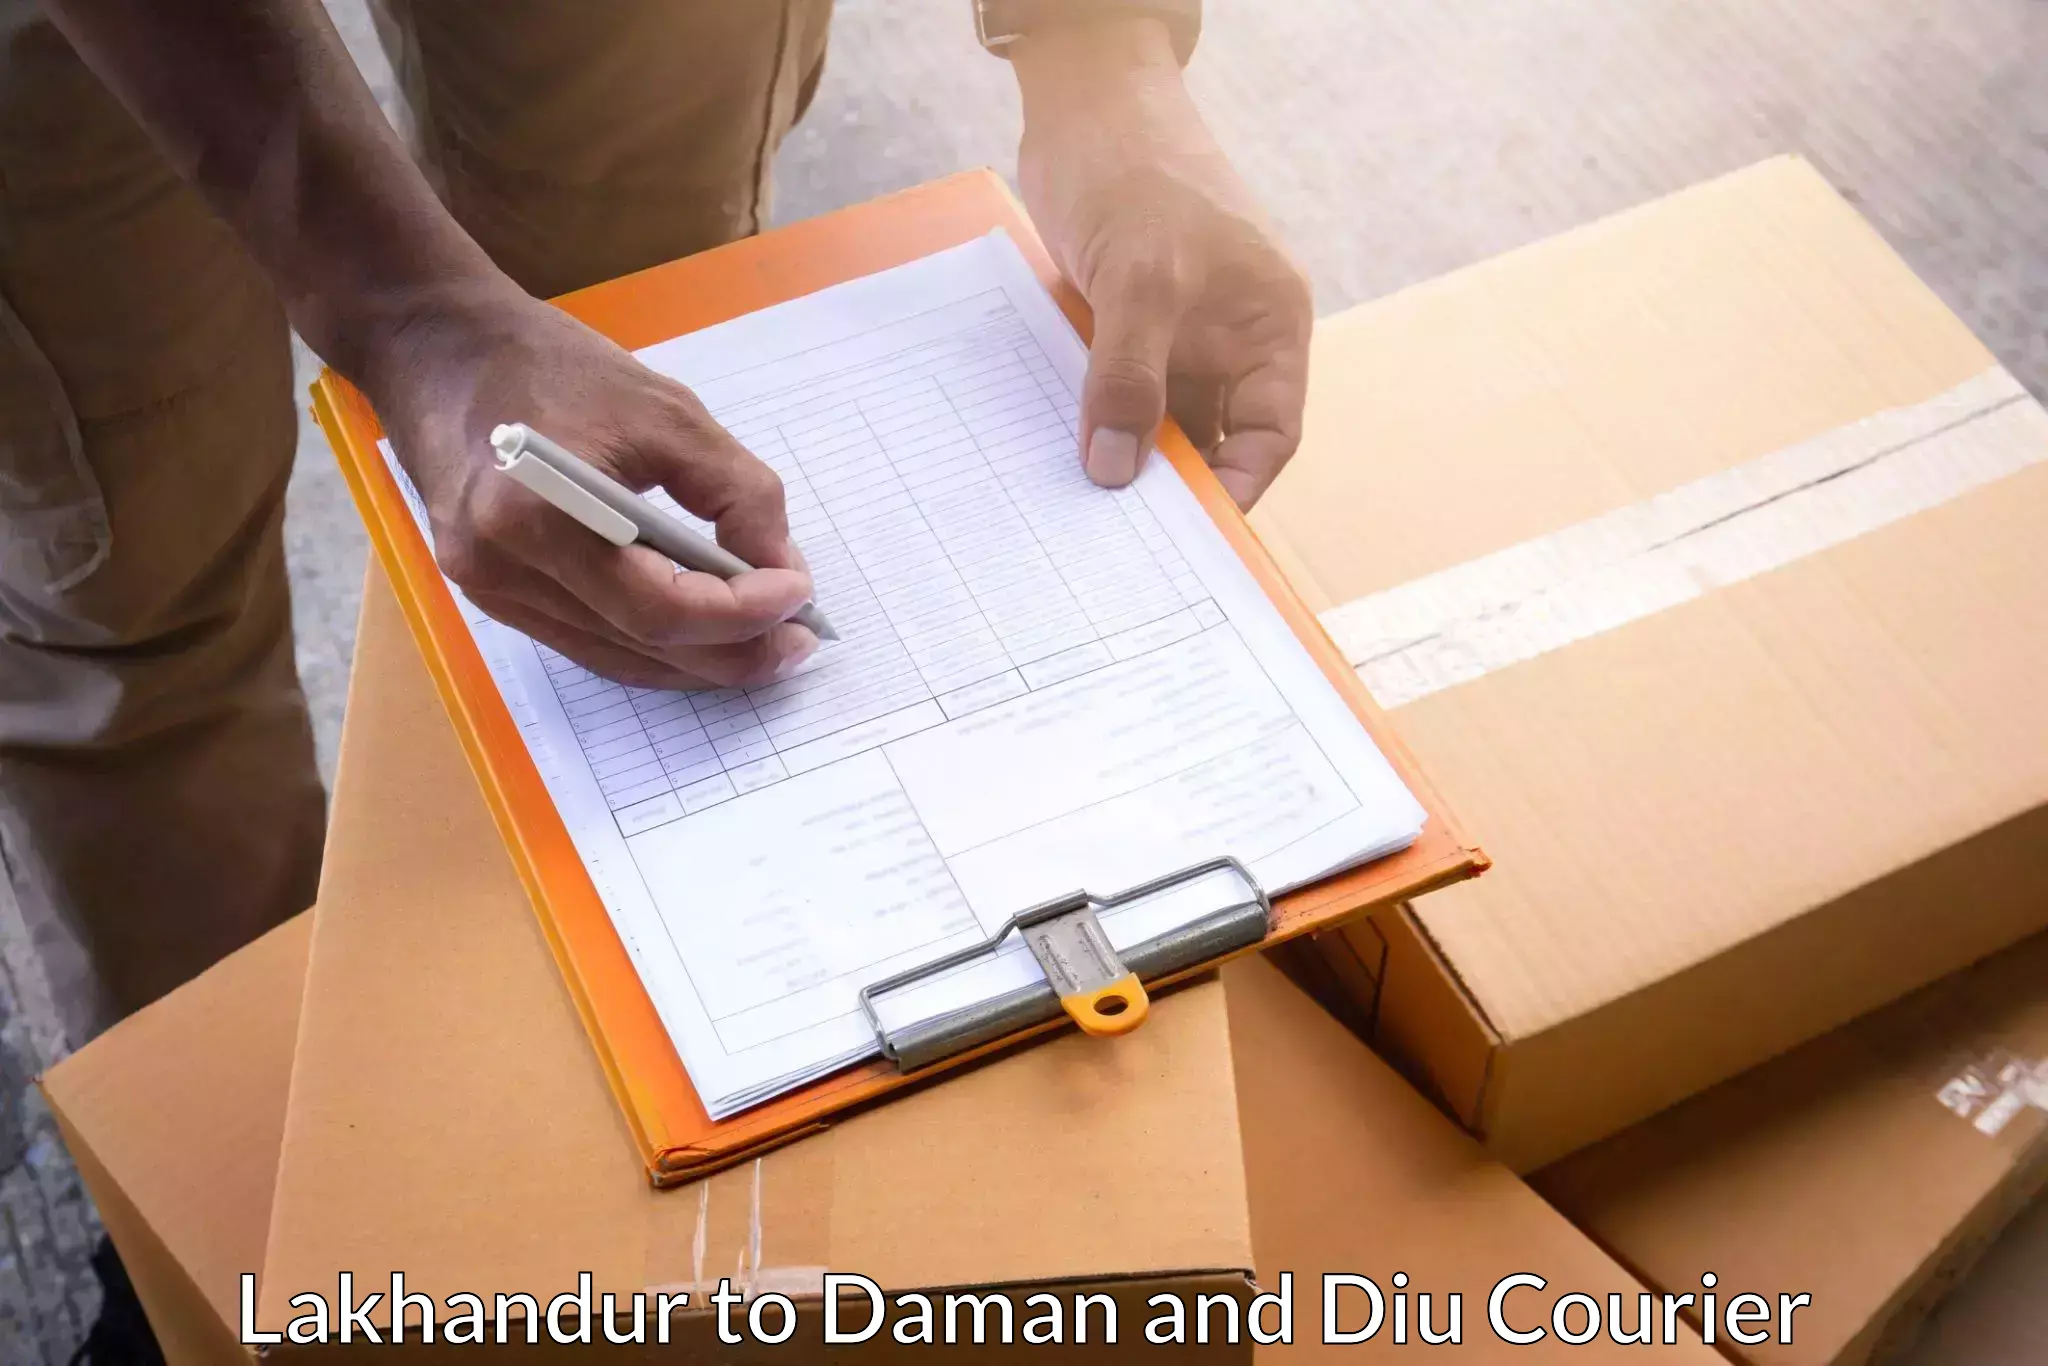 Courier app Lakhandur to Daman and Diu